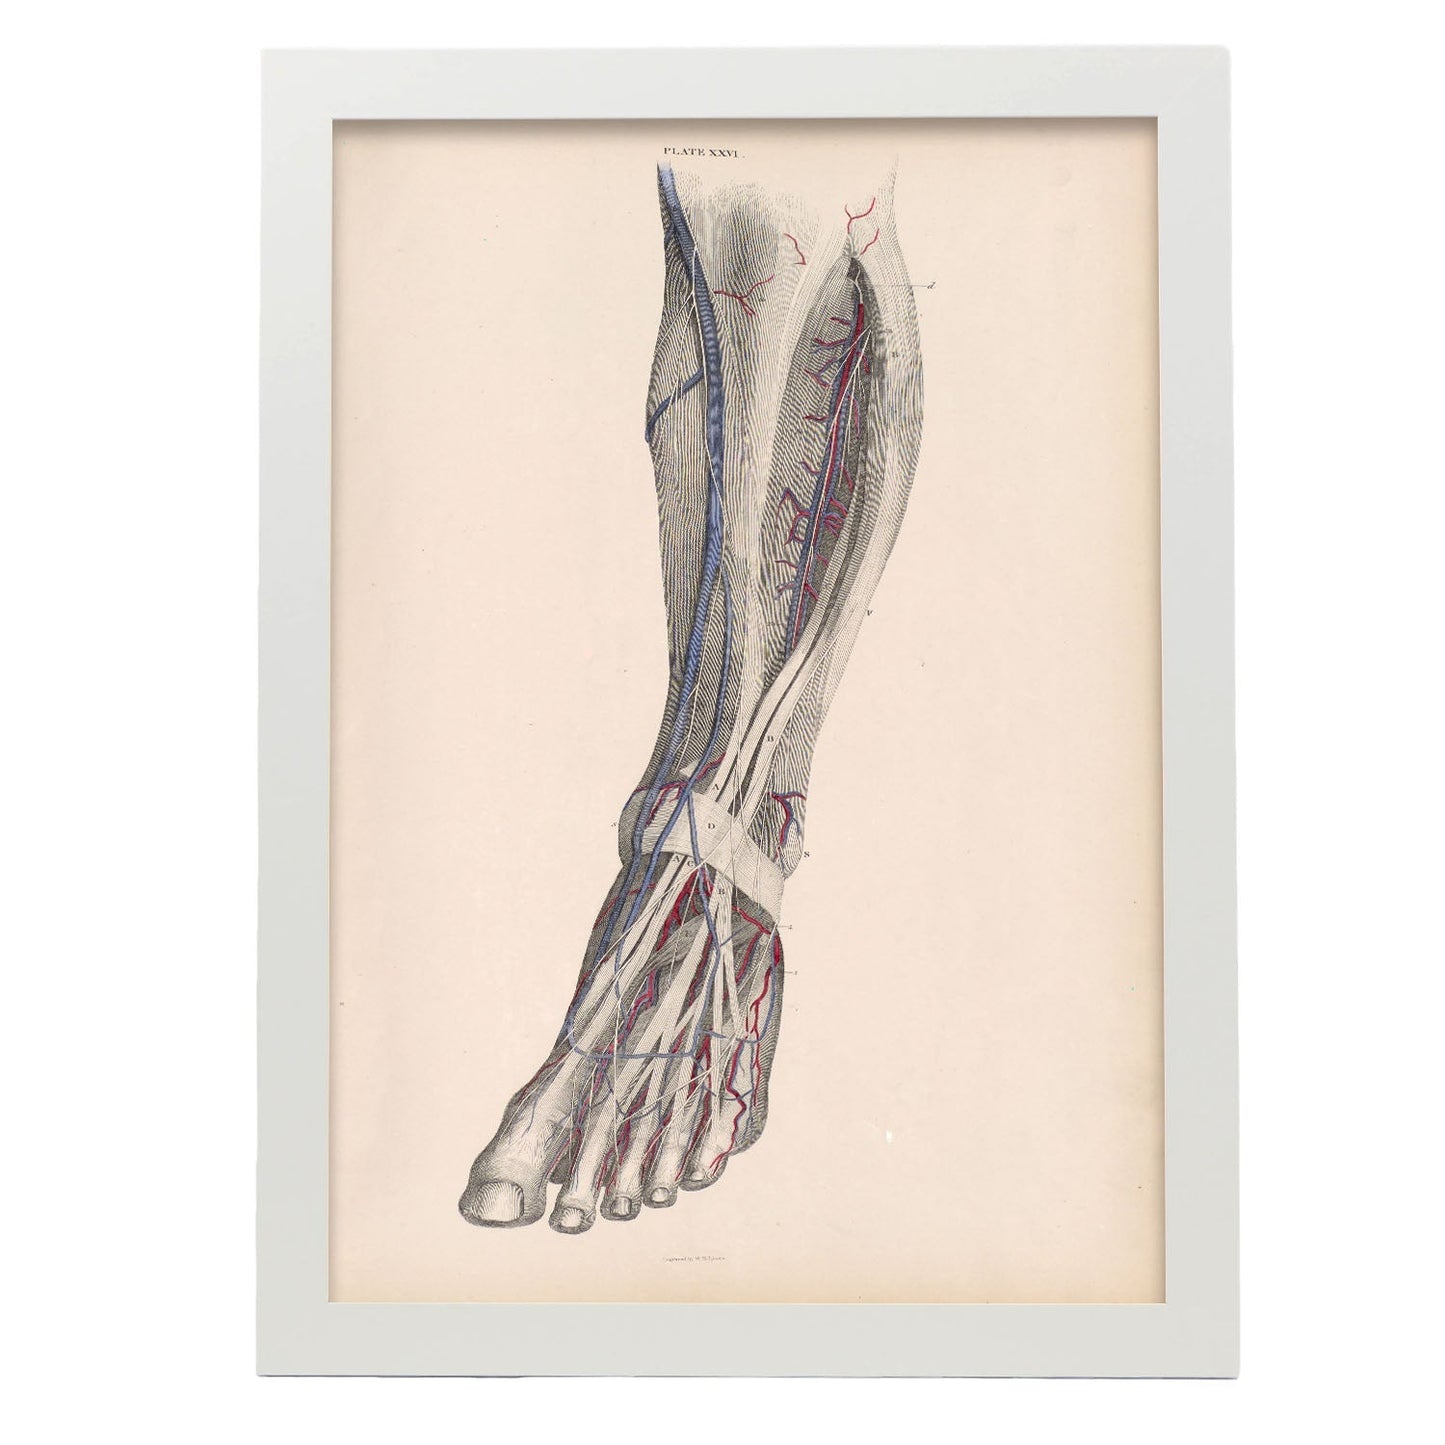 Dissection of the lower leg-Artwork-Nacnic-A3-Marco Blanco-Nacnic Estudio SL